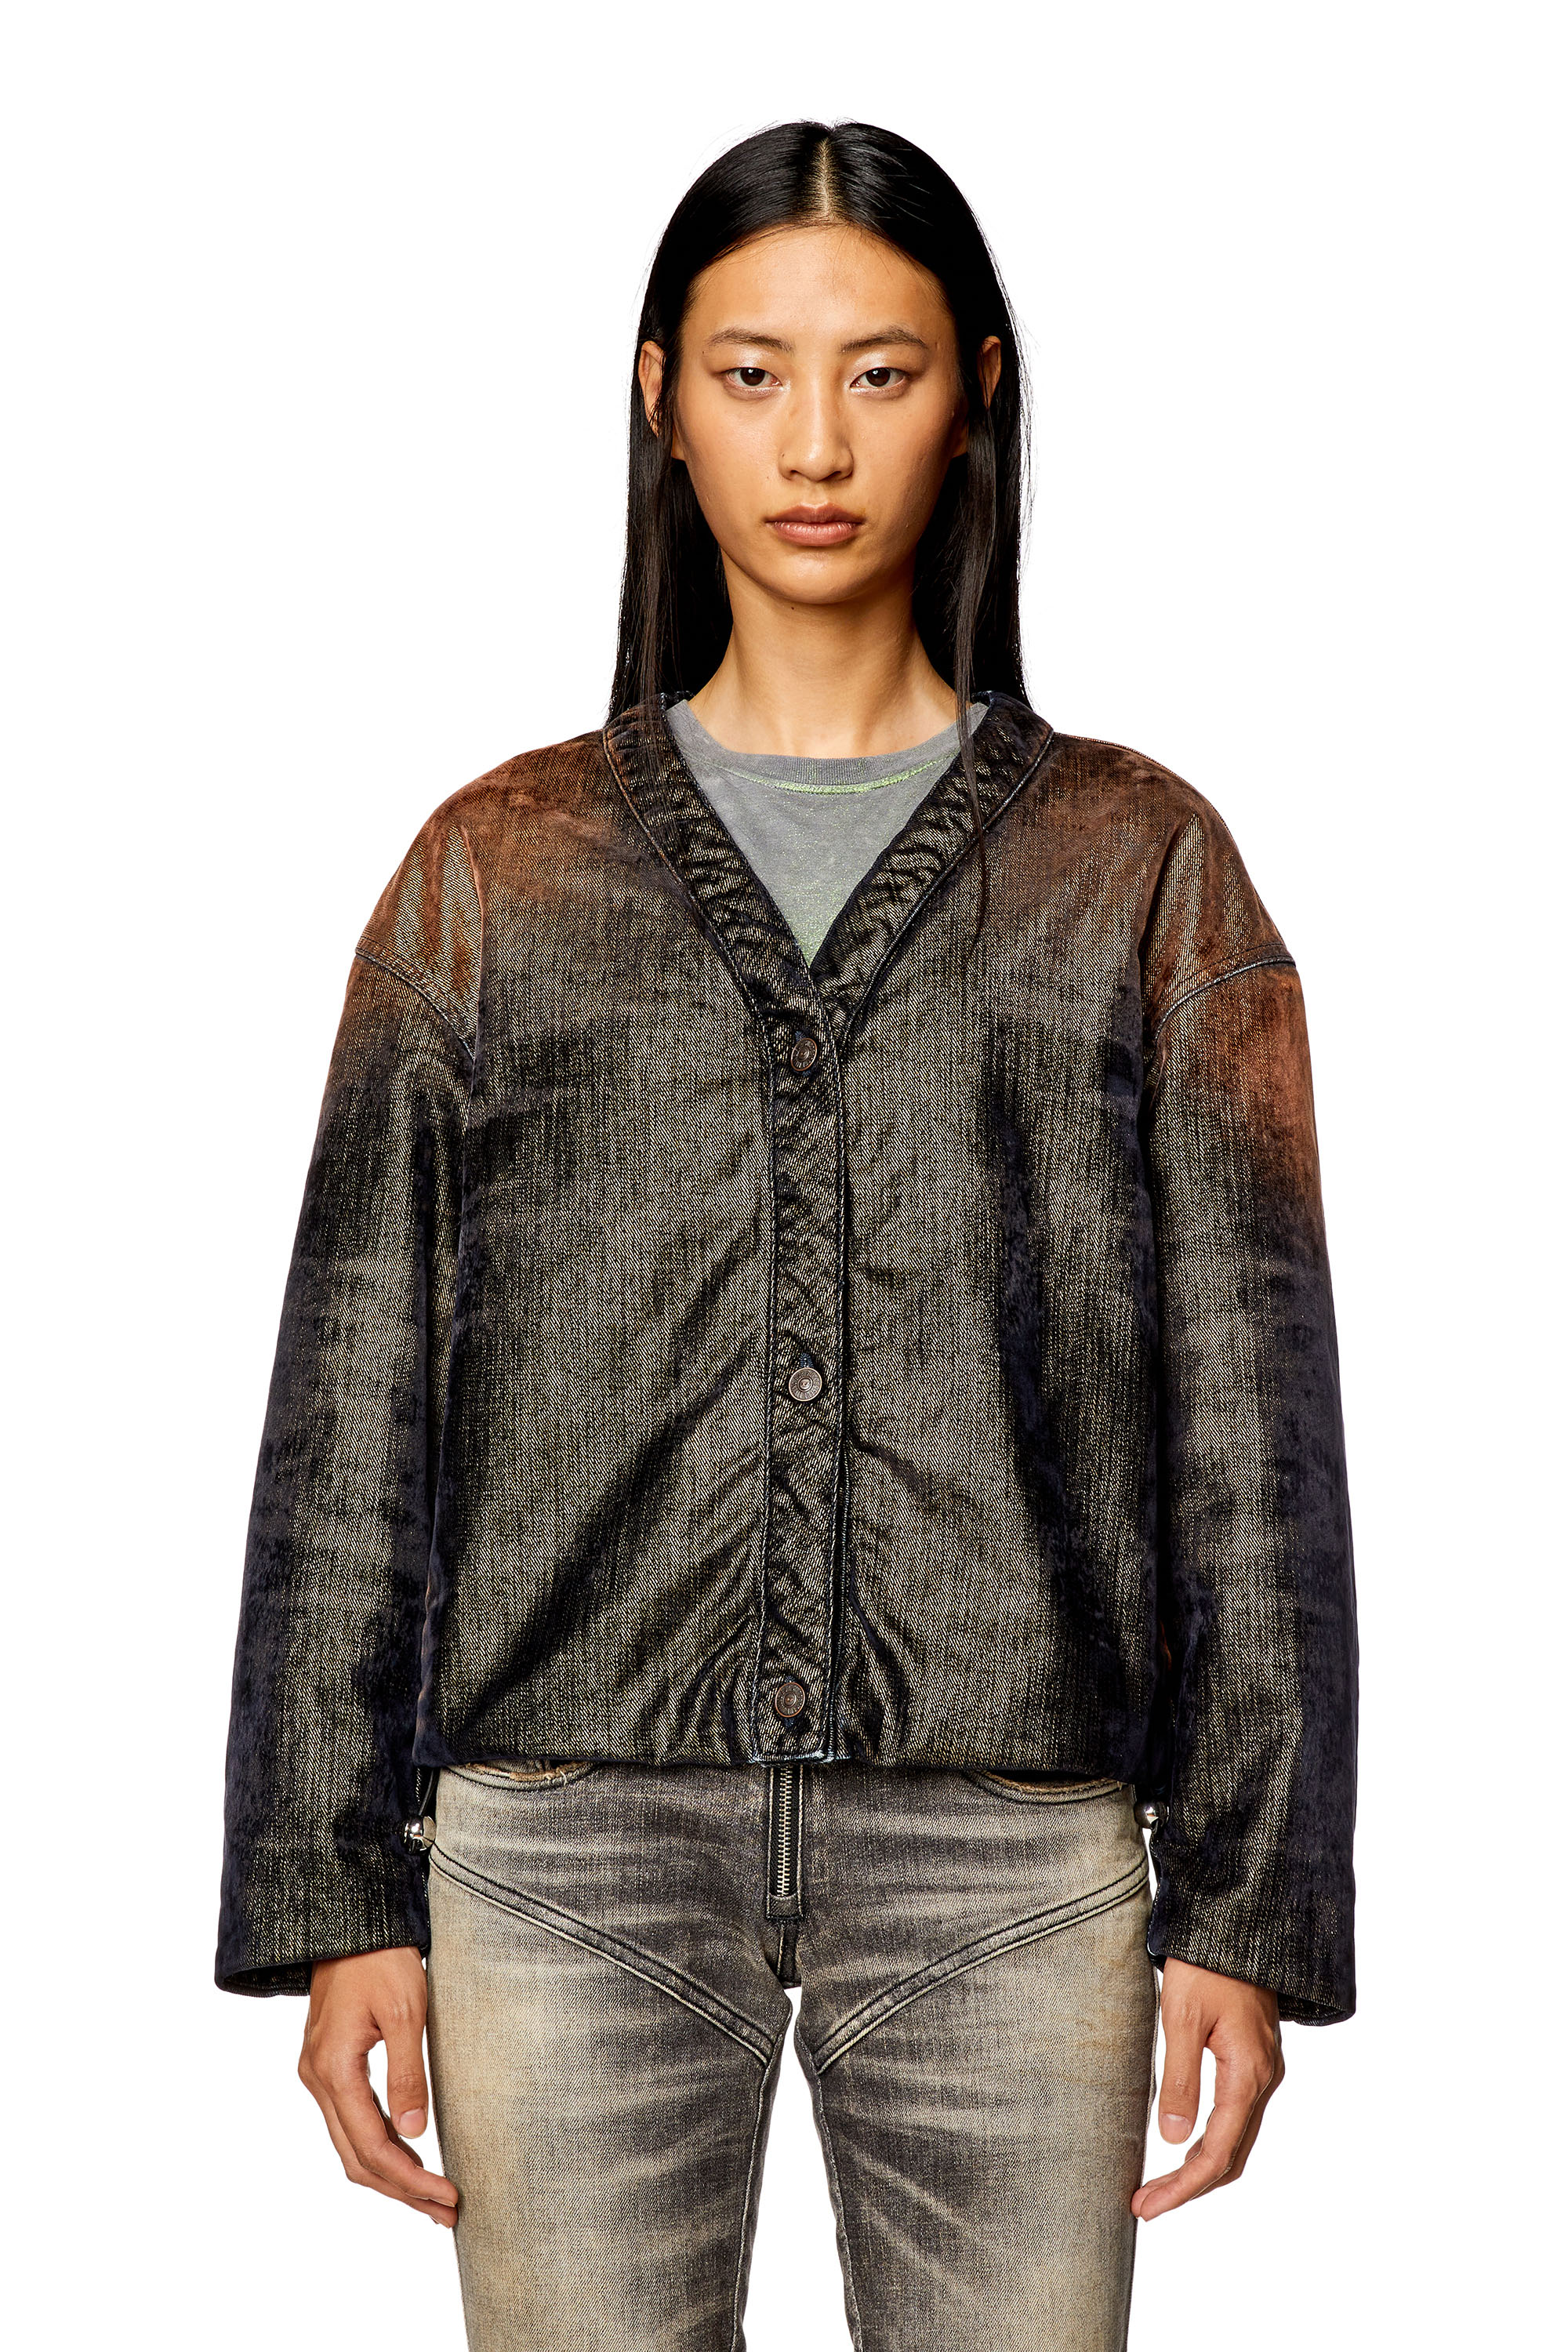 Diesel - DE-CONF-S, Woman Jacket in shimmery denim in Multicolor - Image 5